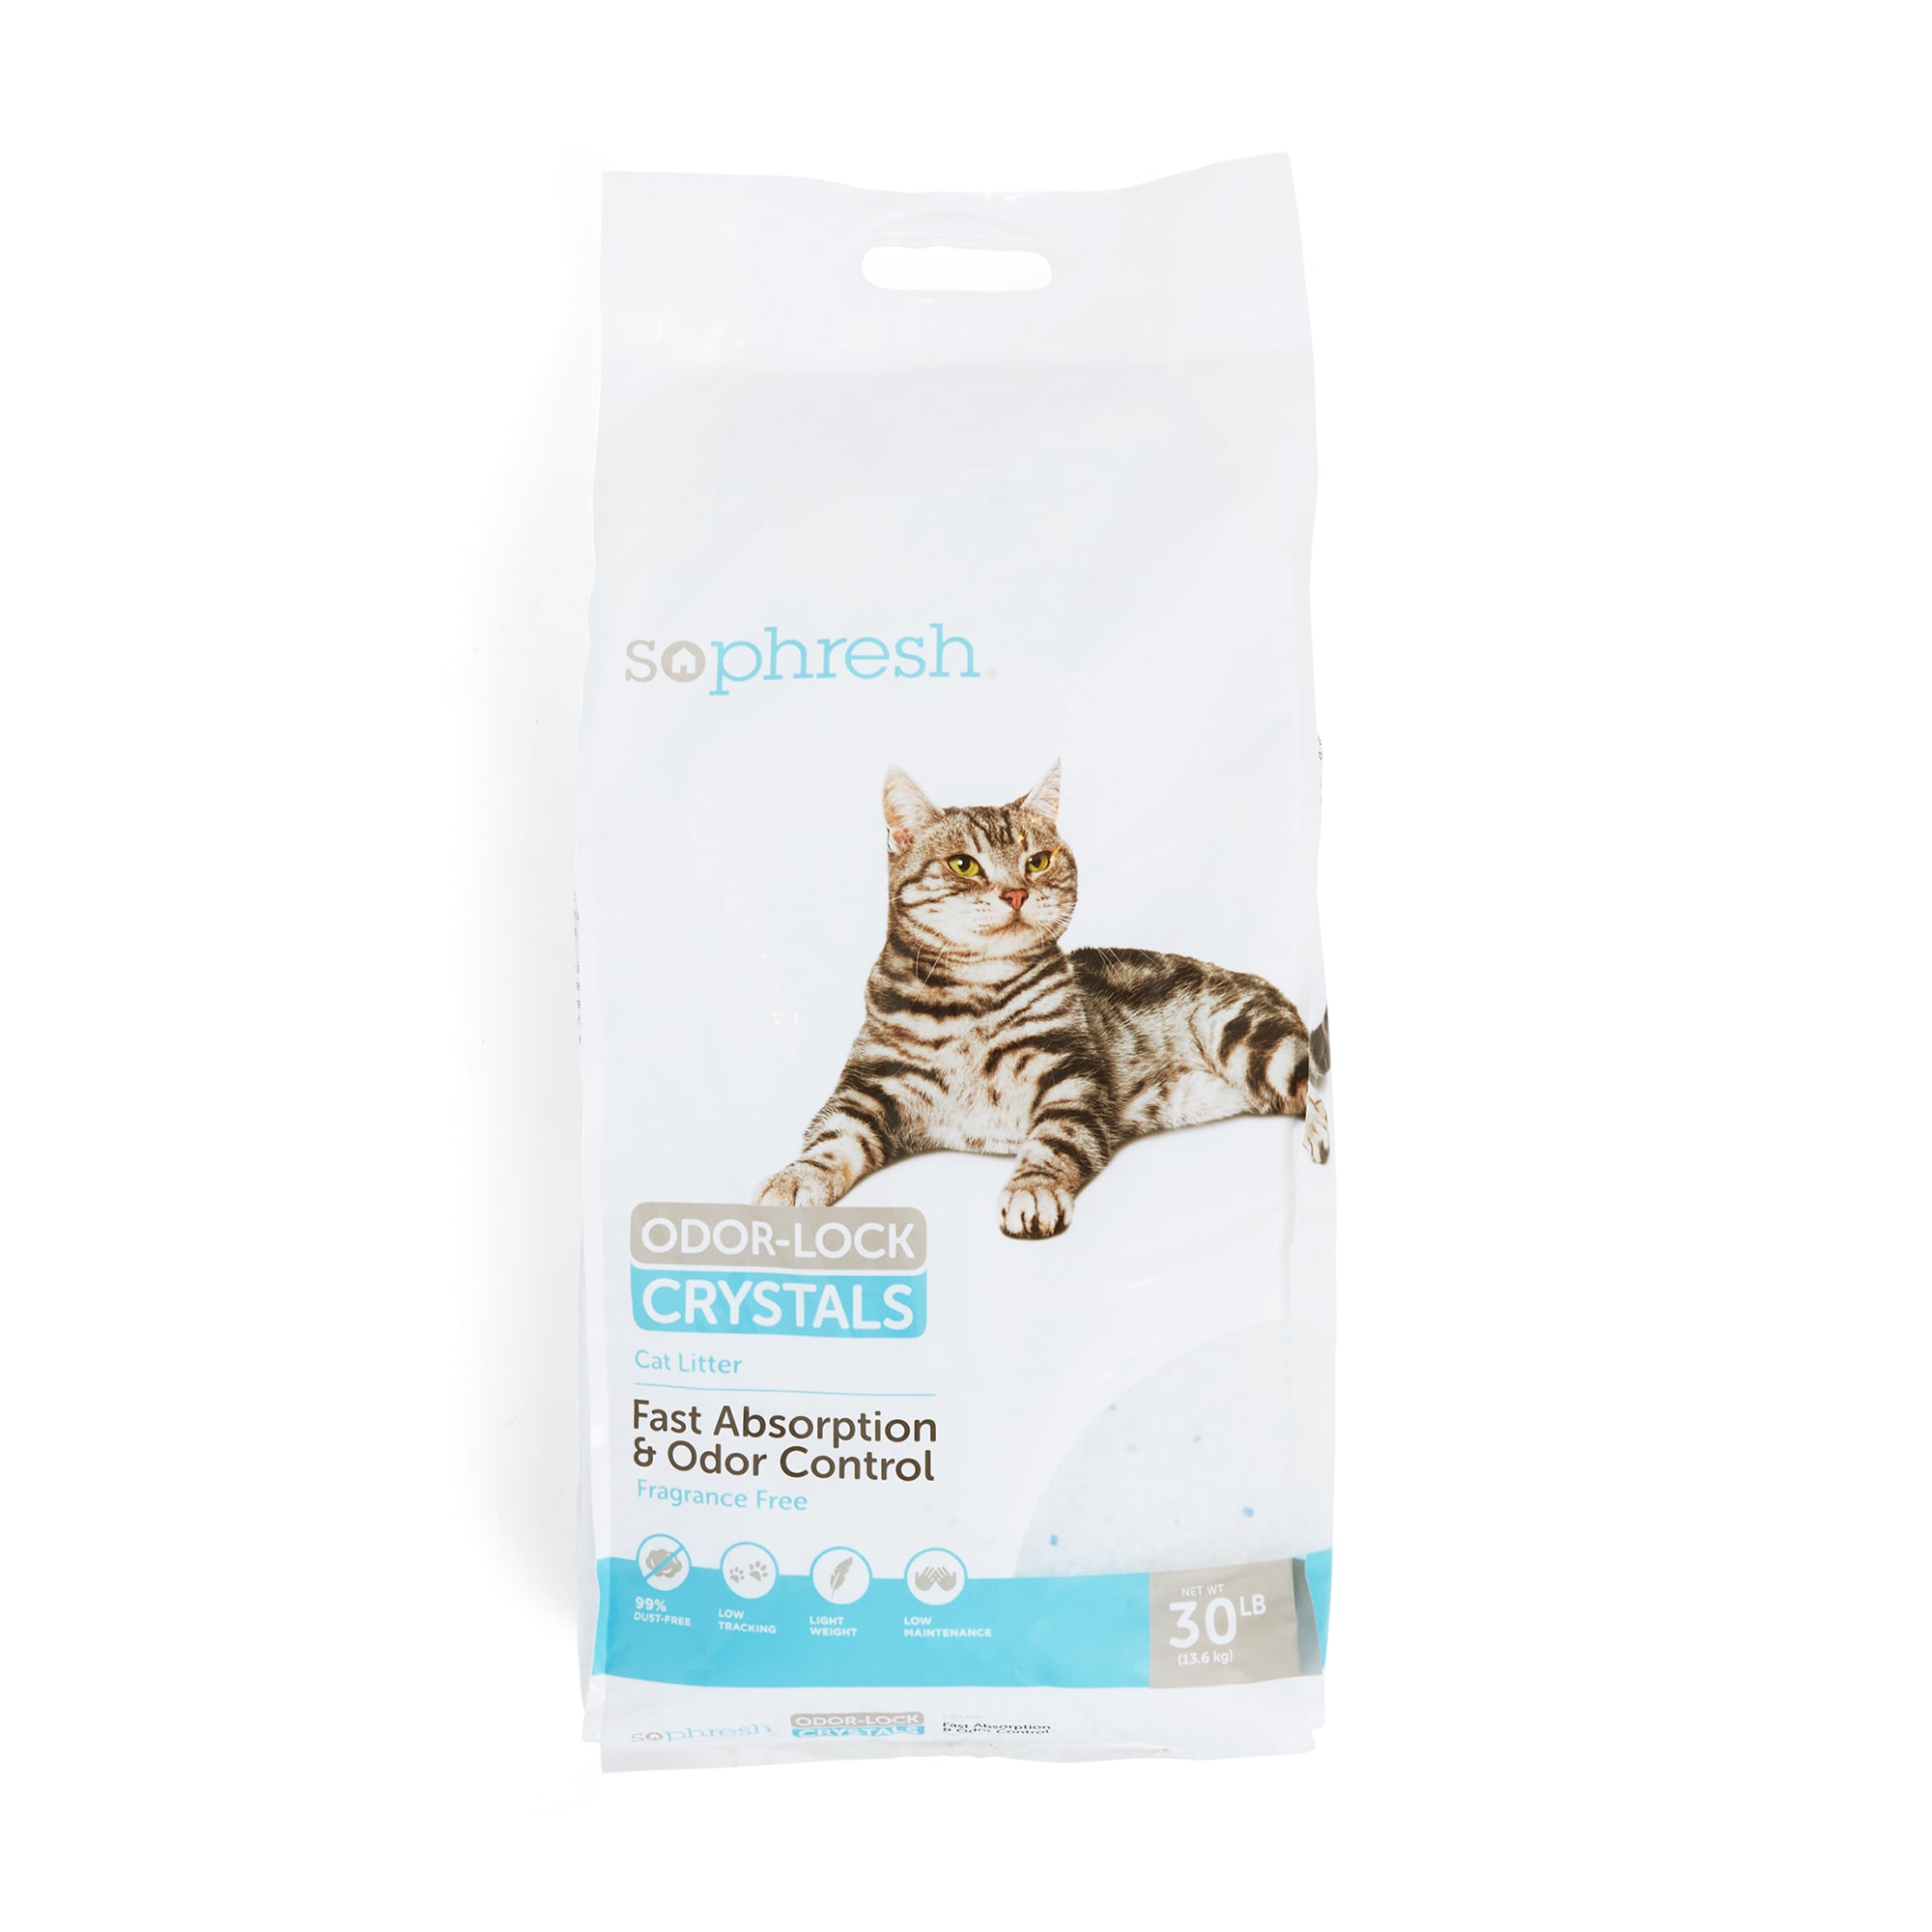 So Phresh OdorLock Crystal Cat Litter, 30 lbs. Petco